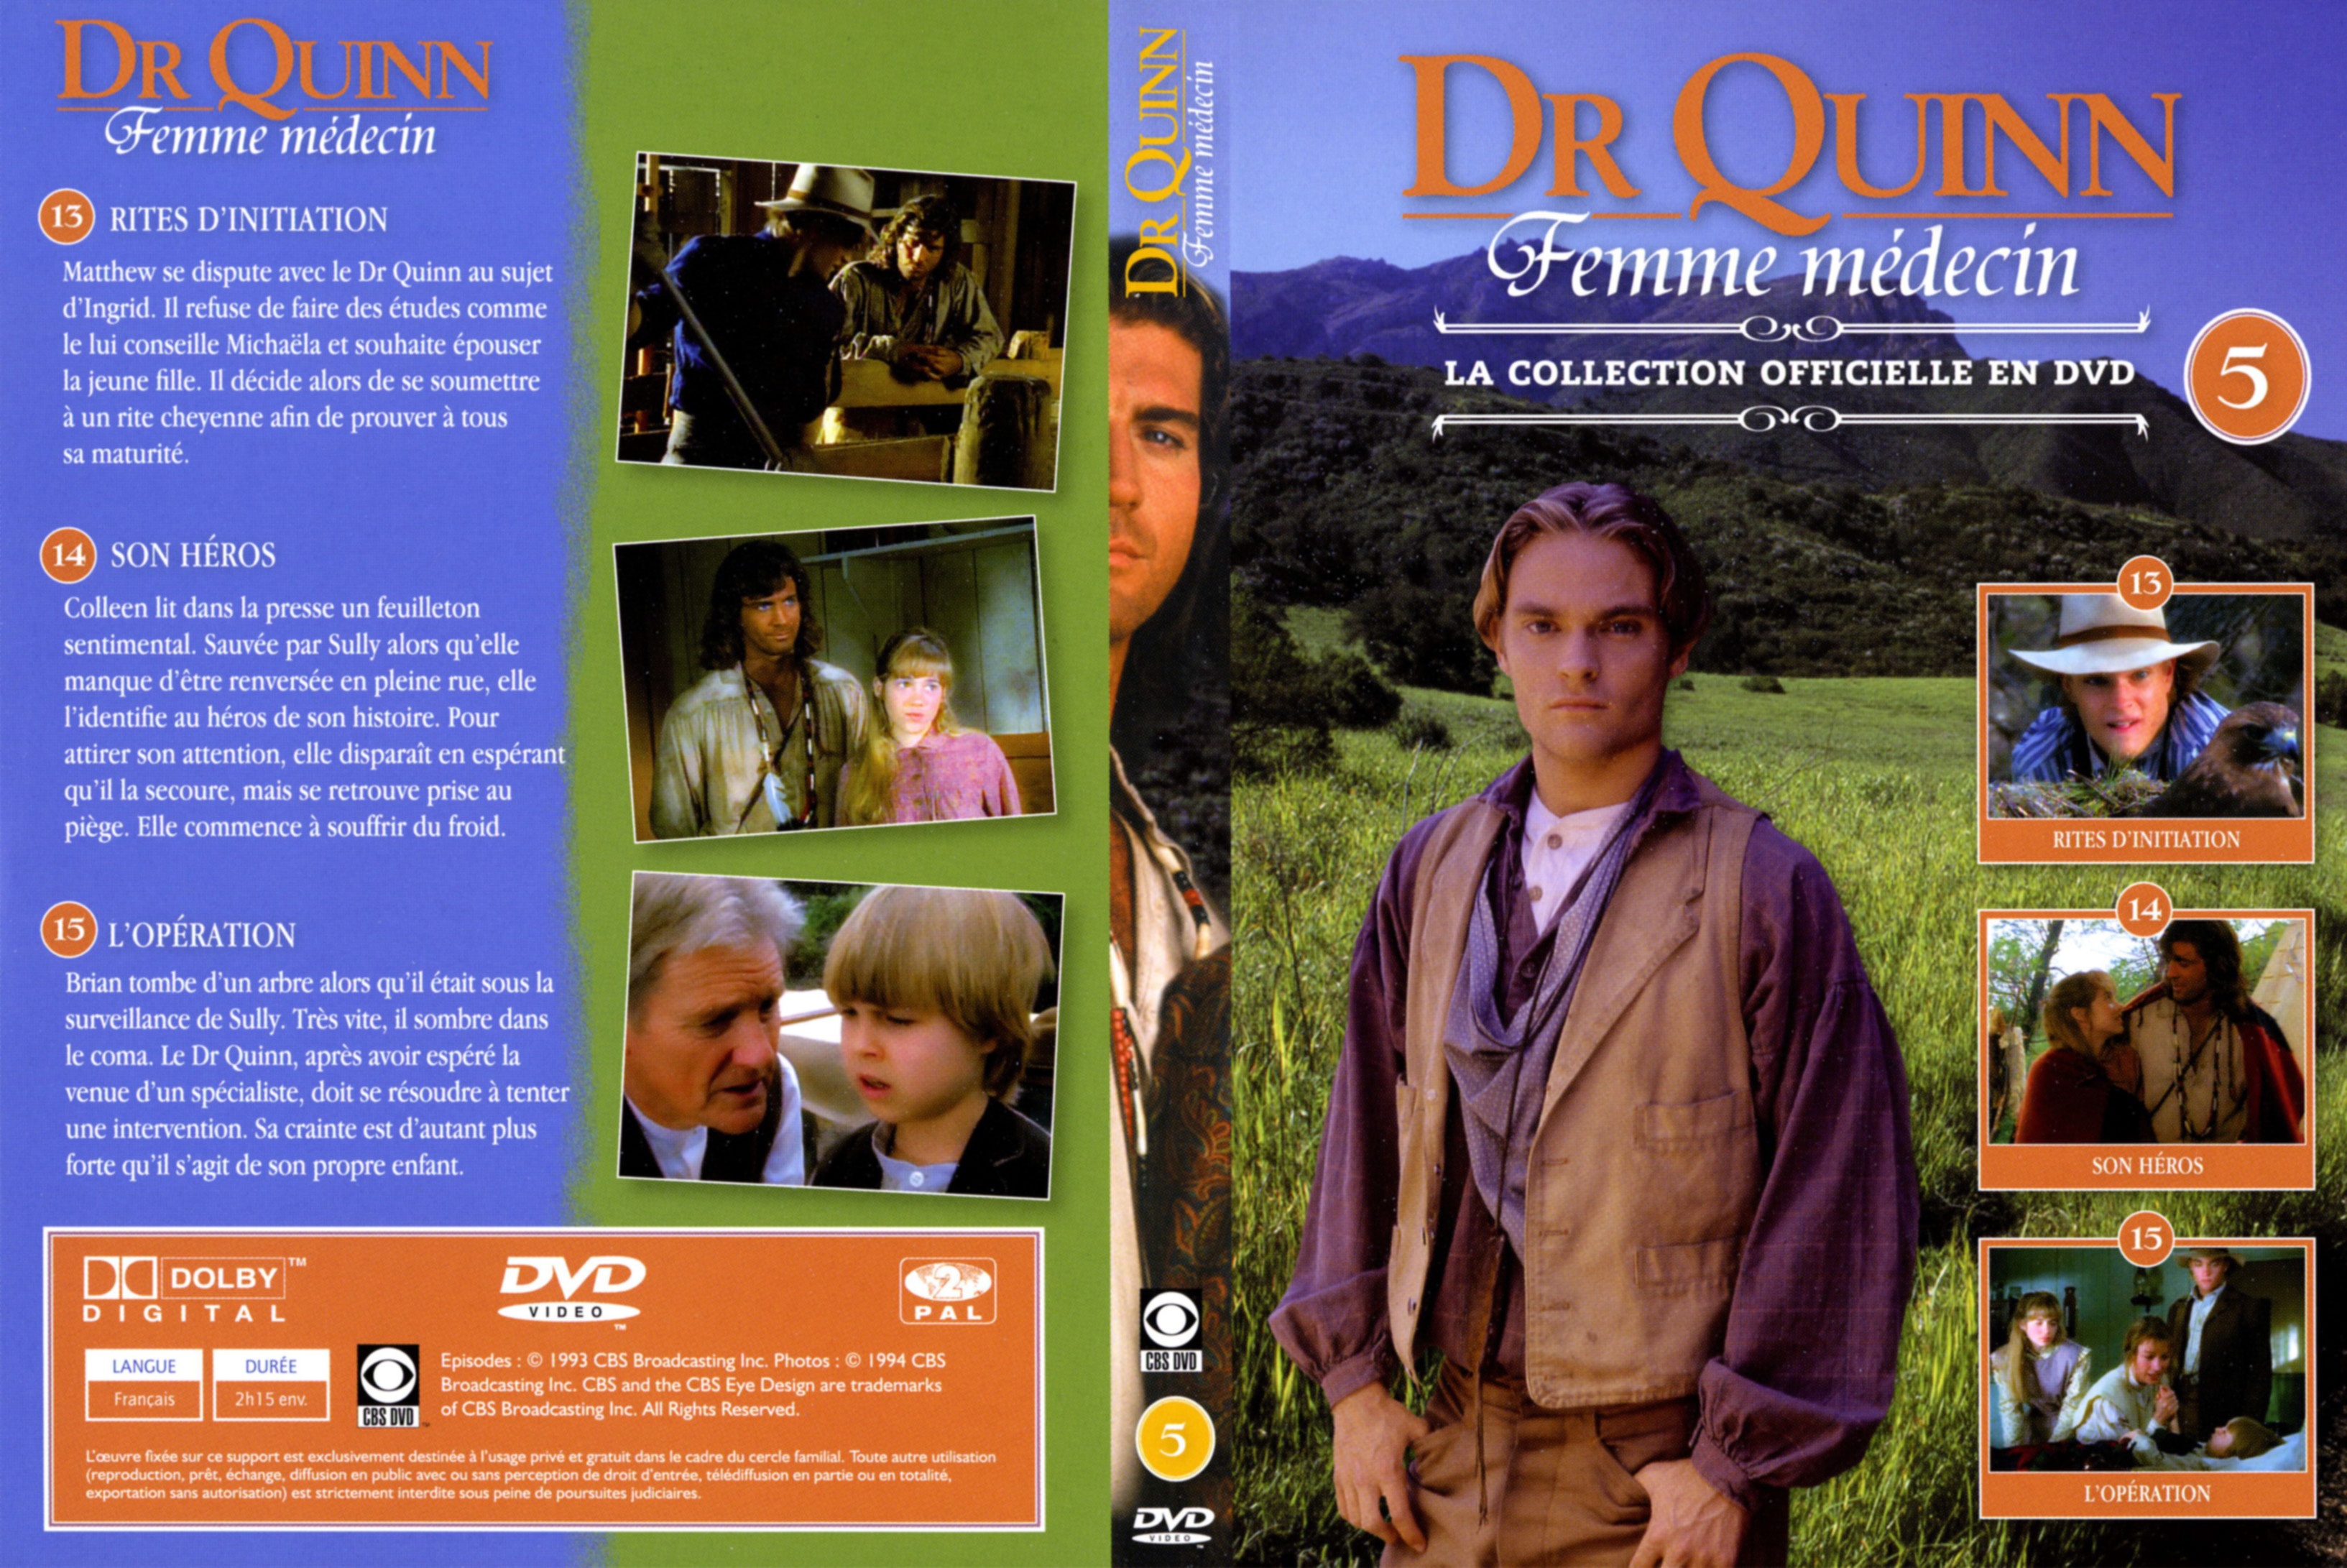 Jaquette DVD Dr Quinn femme medecin vol 5